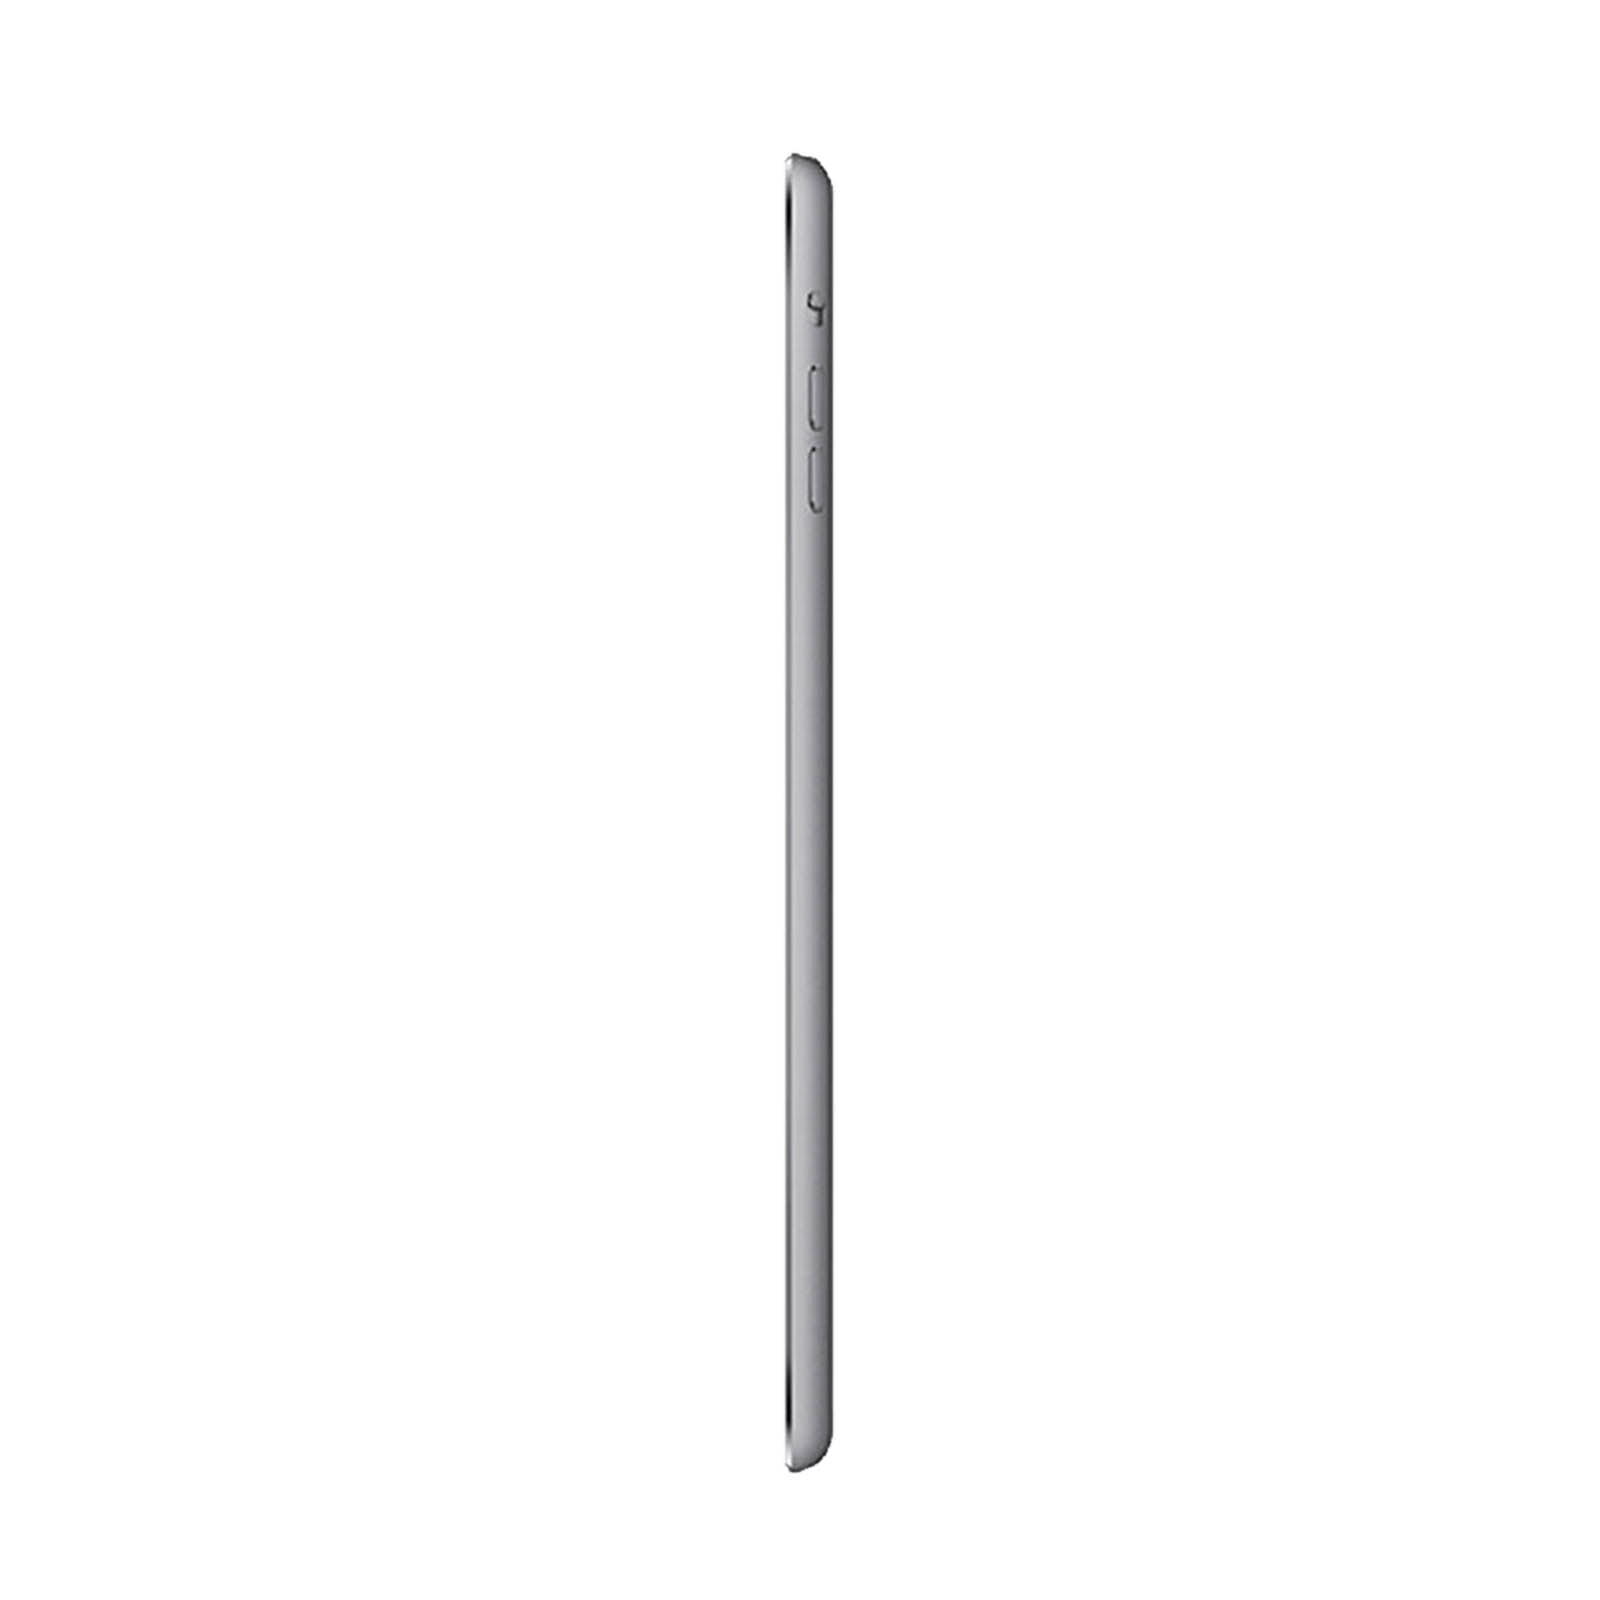 Apple iPad mini 3 64GB Space Grey Good - Unlocked